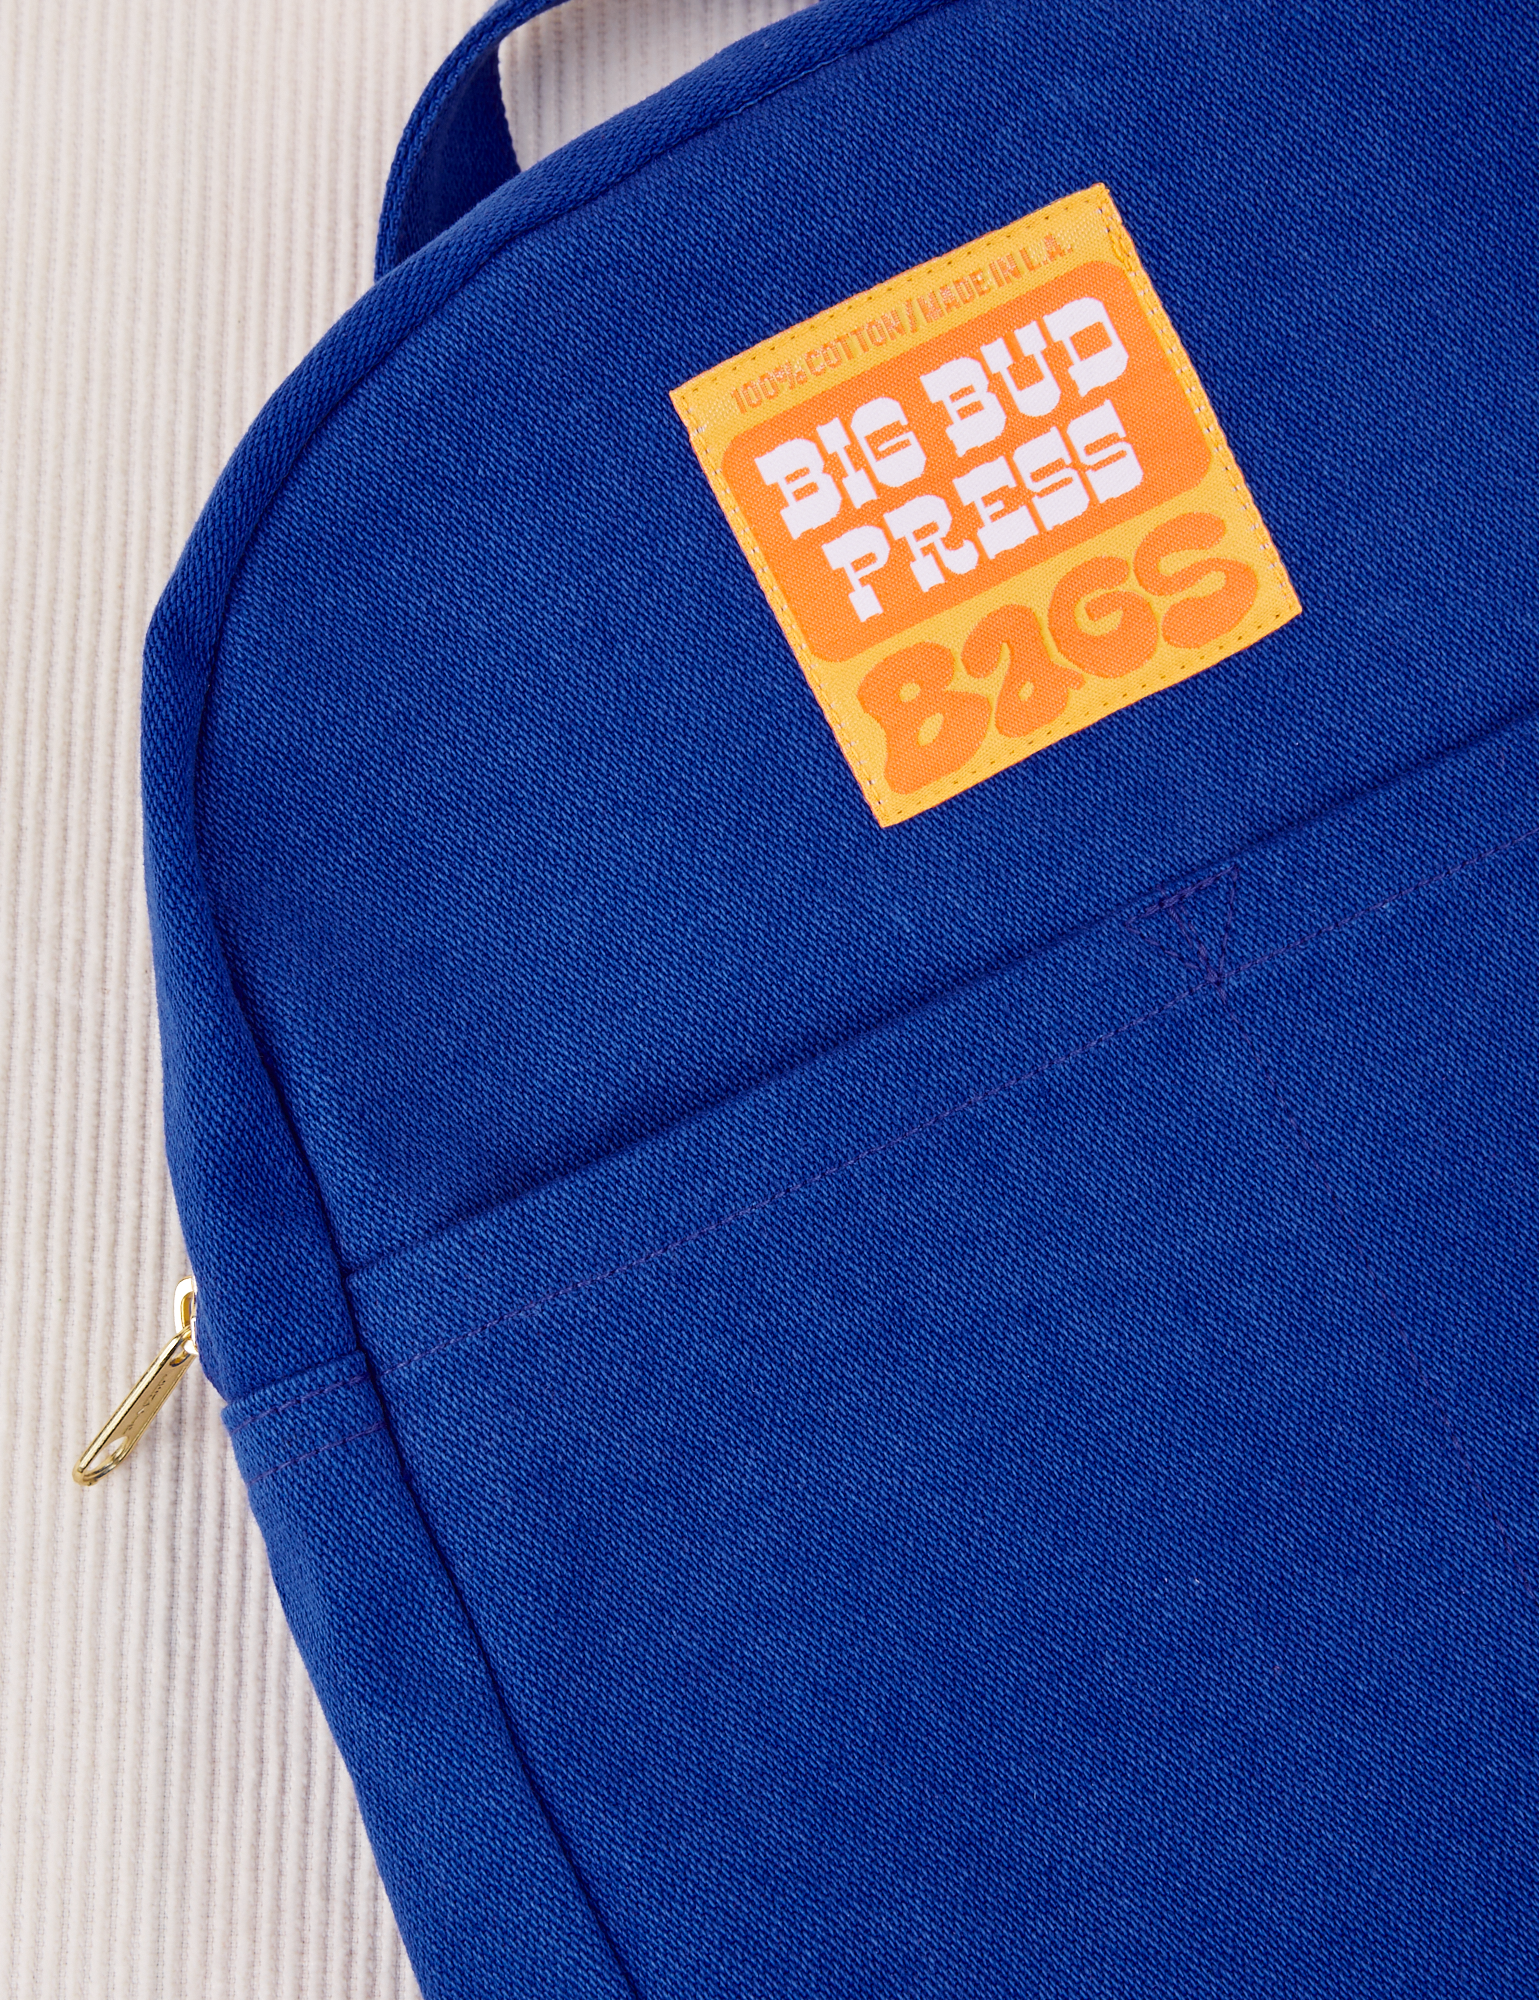 Mini Backpacks *FINAL SALE* – BIG BUD PRESS